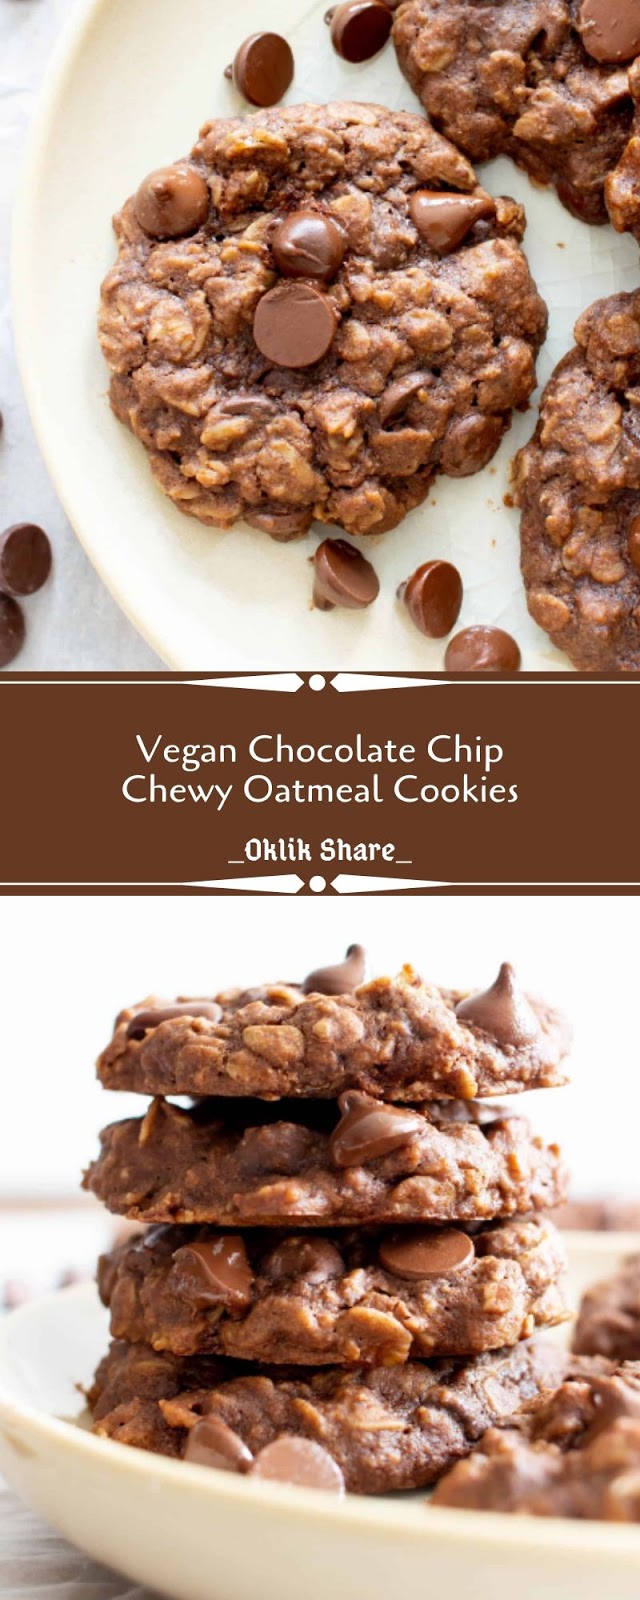 Vegan Chocolate Chip Chewy Oatmeal Cookies